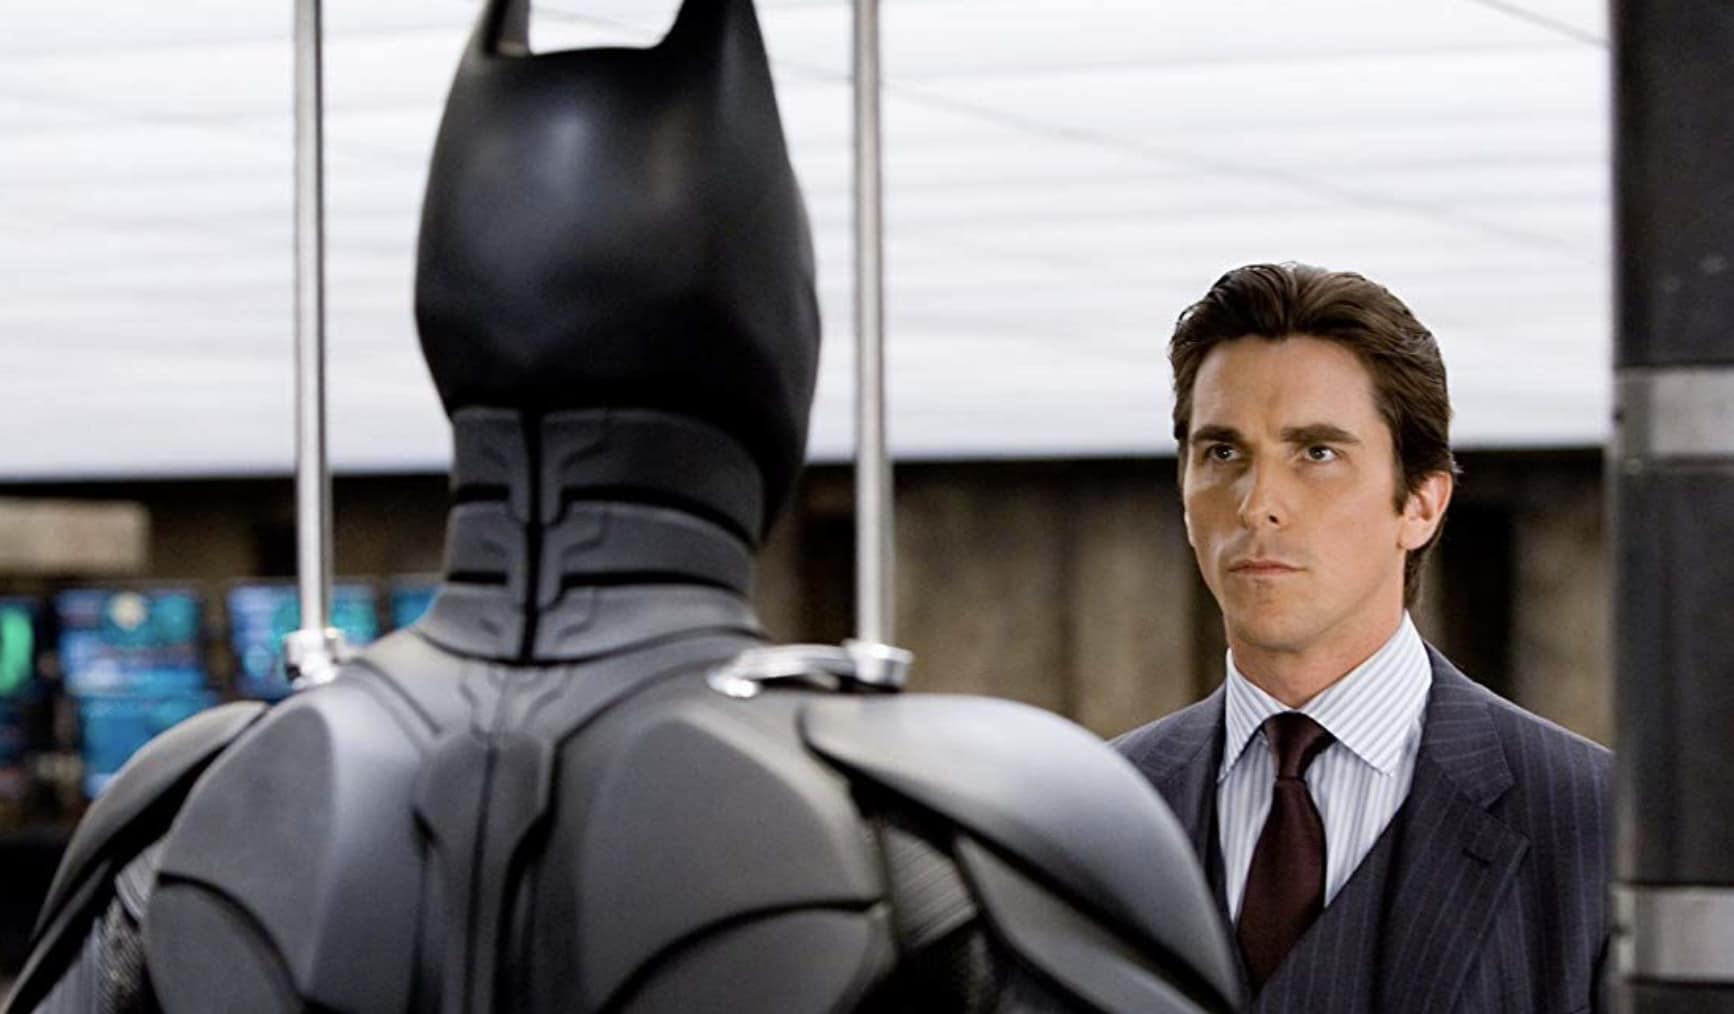 Christian Bale Open to Returning as Batman If Christopher Nolan Asks